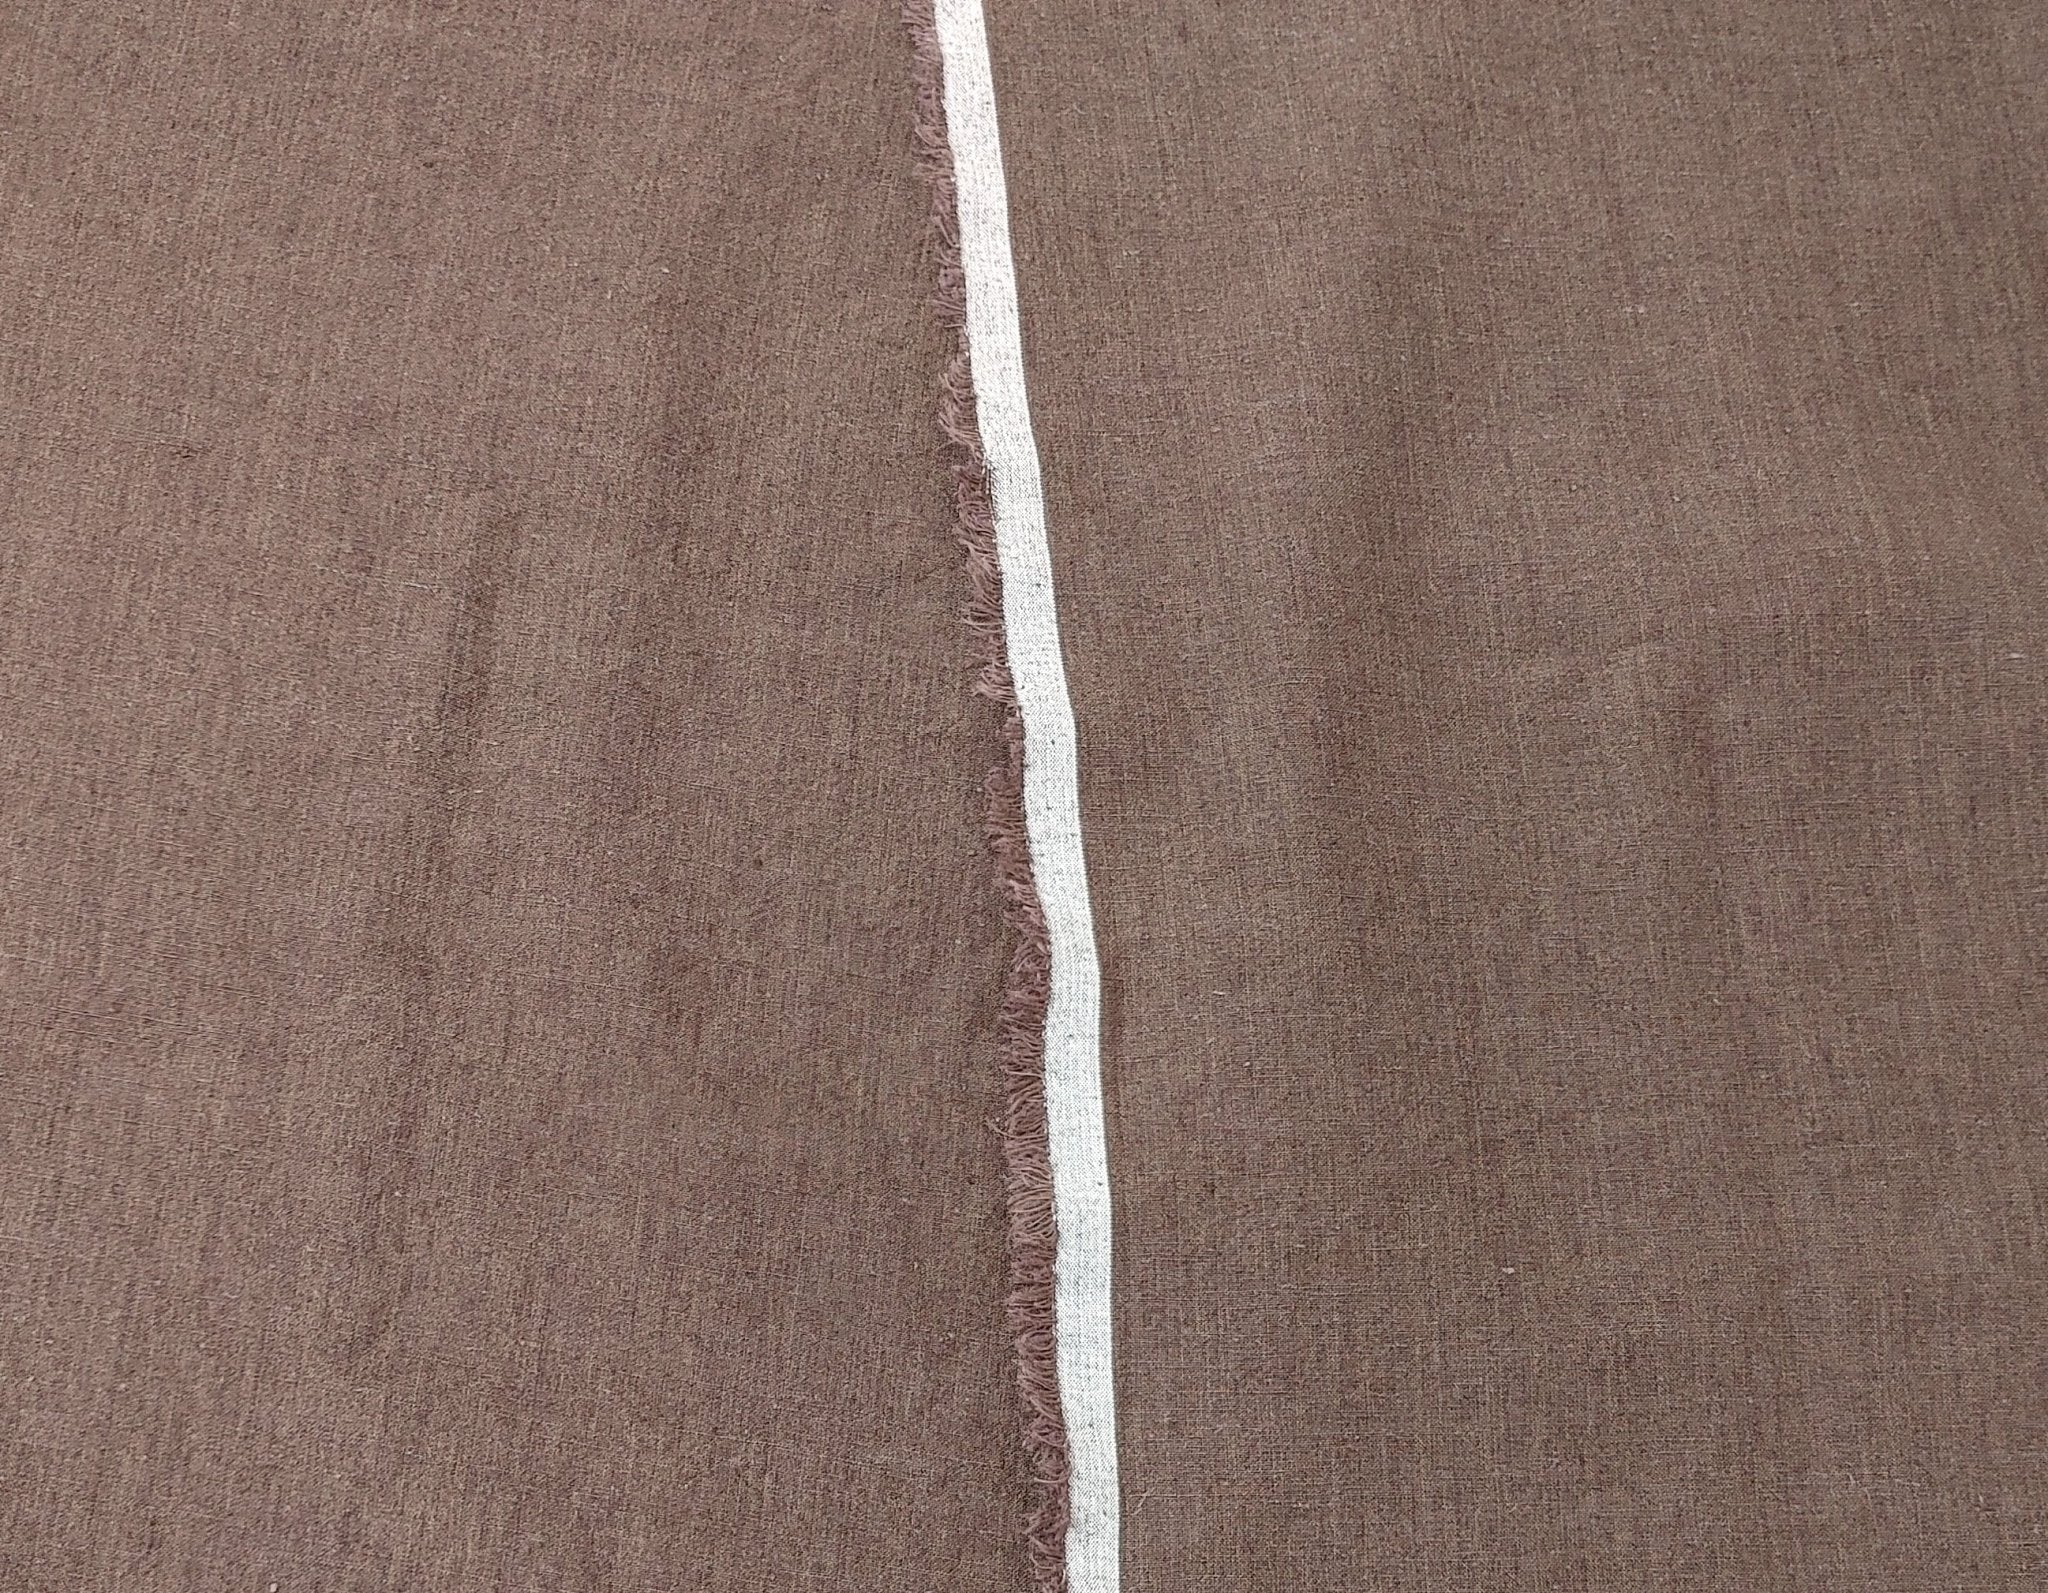 Vintage Dyed Medium Weight Linen Ramie Cotton Fabric with Plain Weave 7820 7771 7770 7819 7818 - The Linen Lab - Khaki(Light)